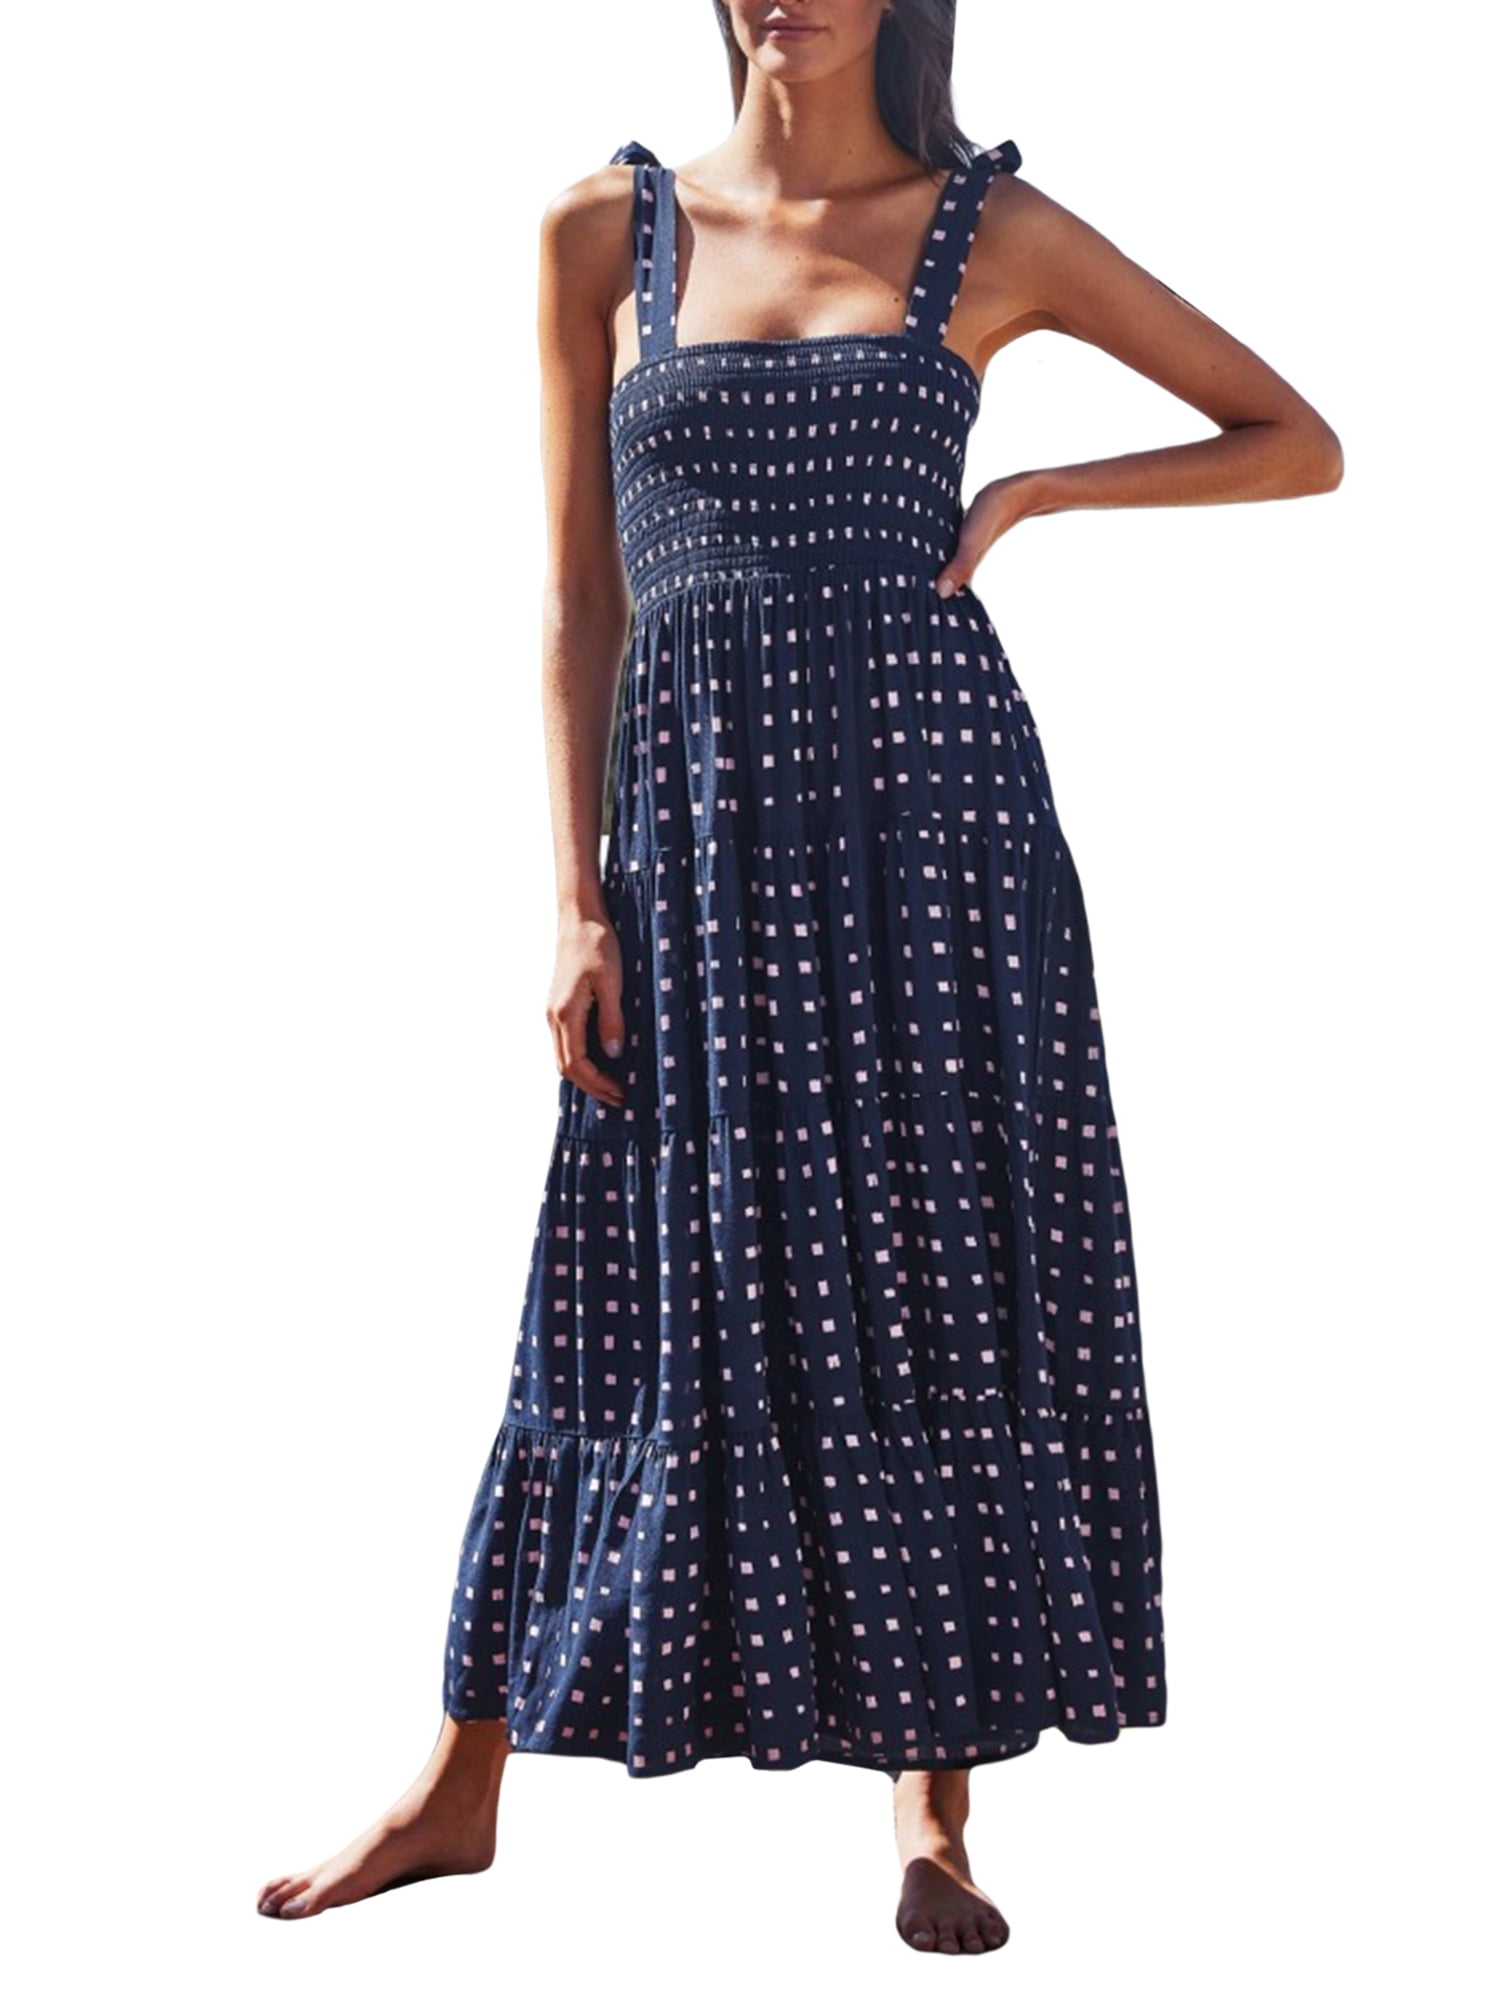 Dress for Women Summer Ruffle Belt Boho Floral Spaghetti Strap Lace up Dot Print Dress Swing Midi Dress 